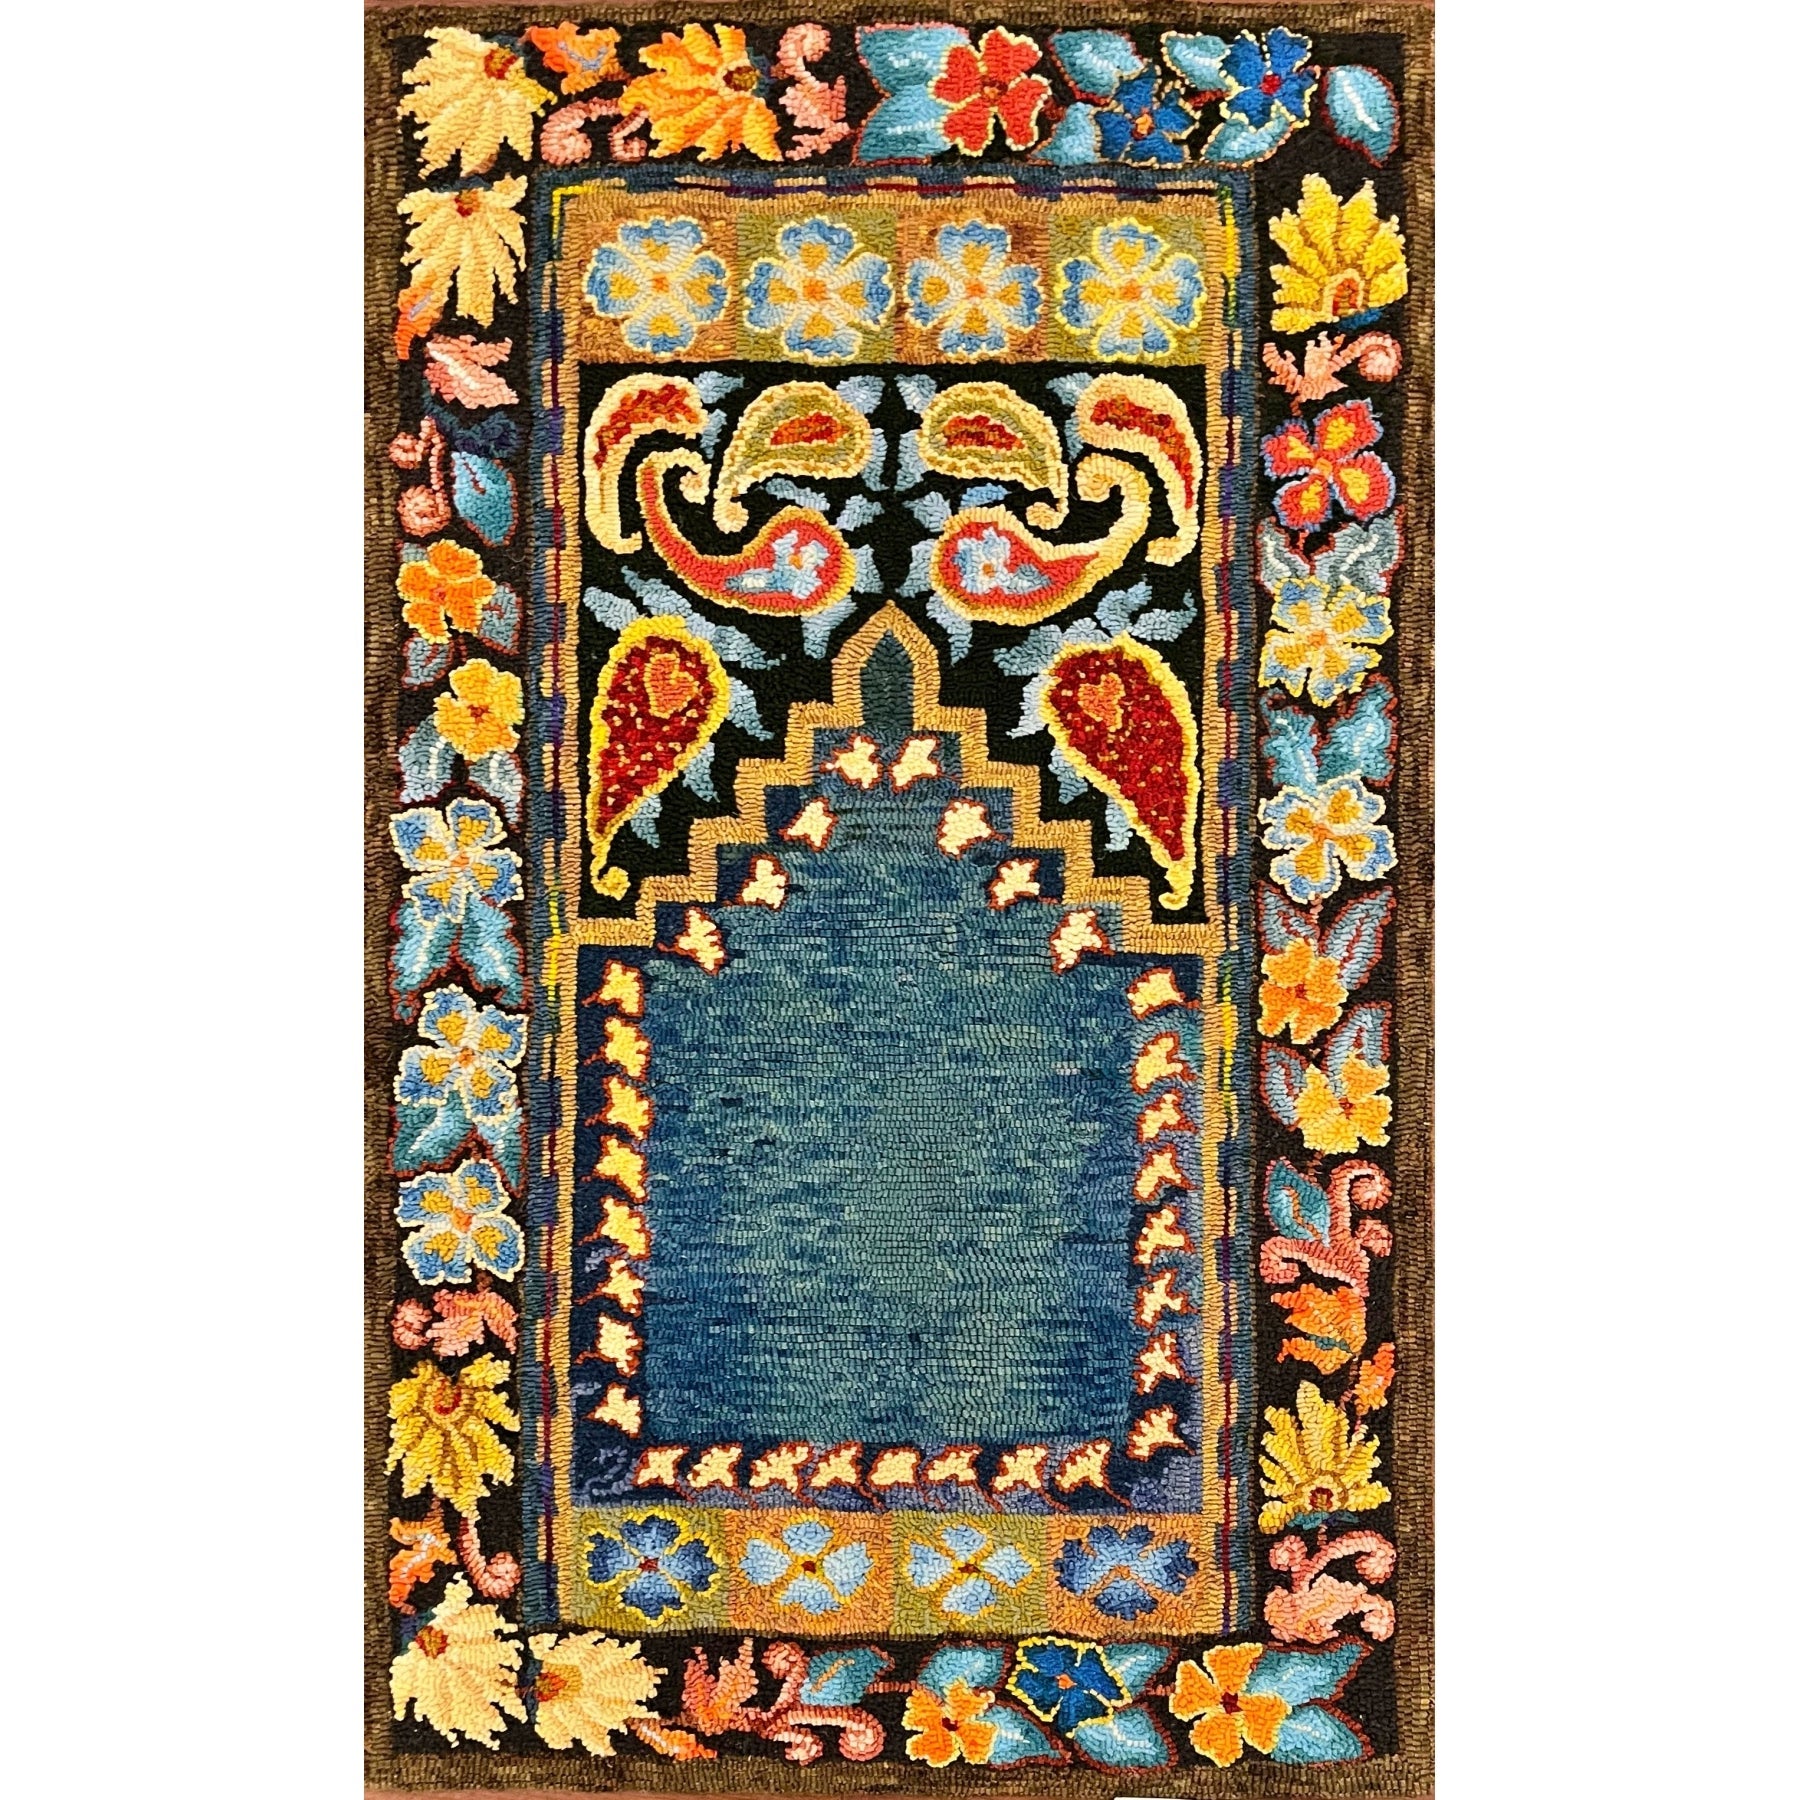 Faith Prayer, rug hooked by Elise Olsen